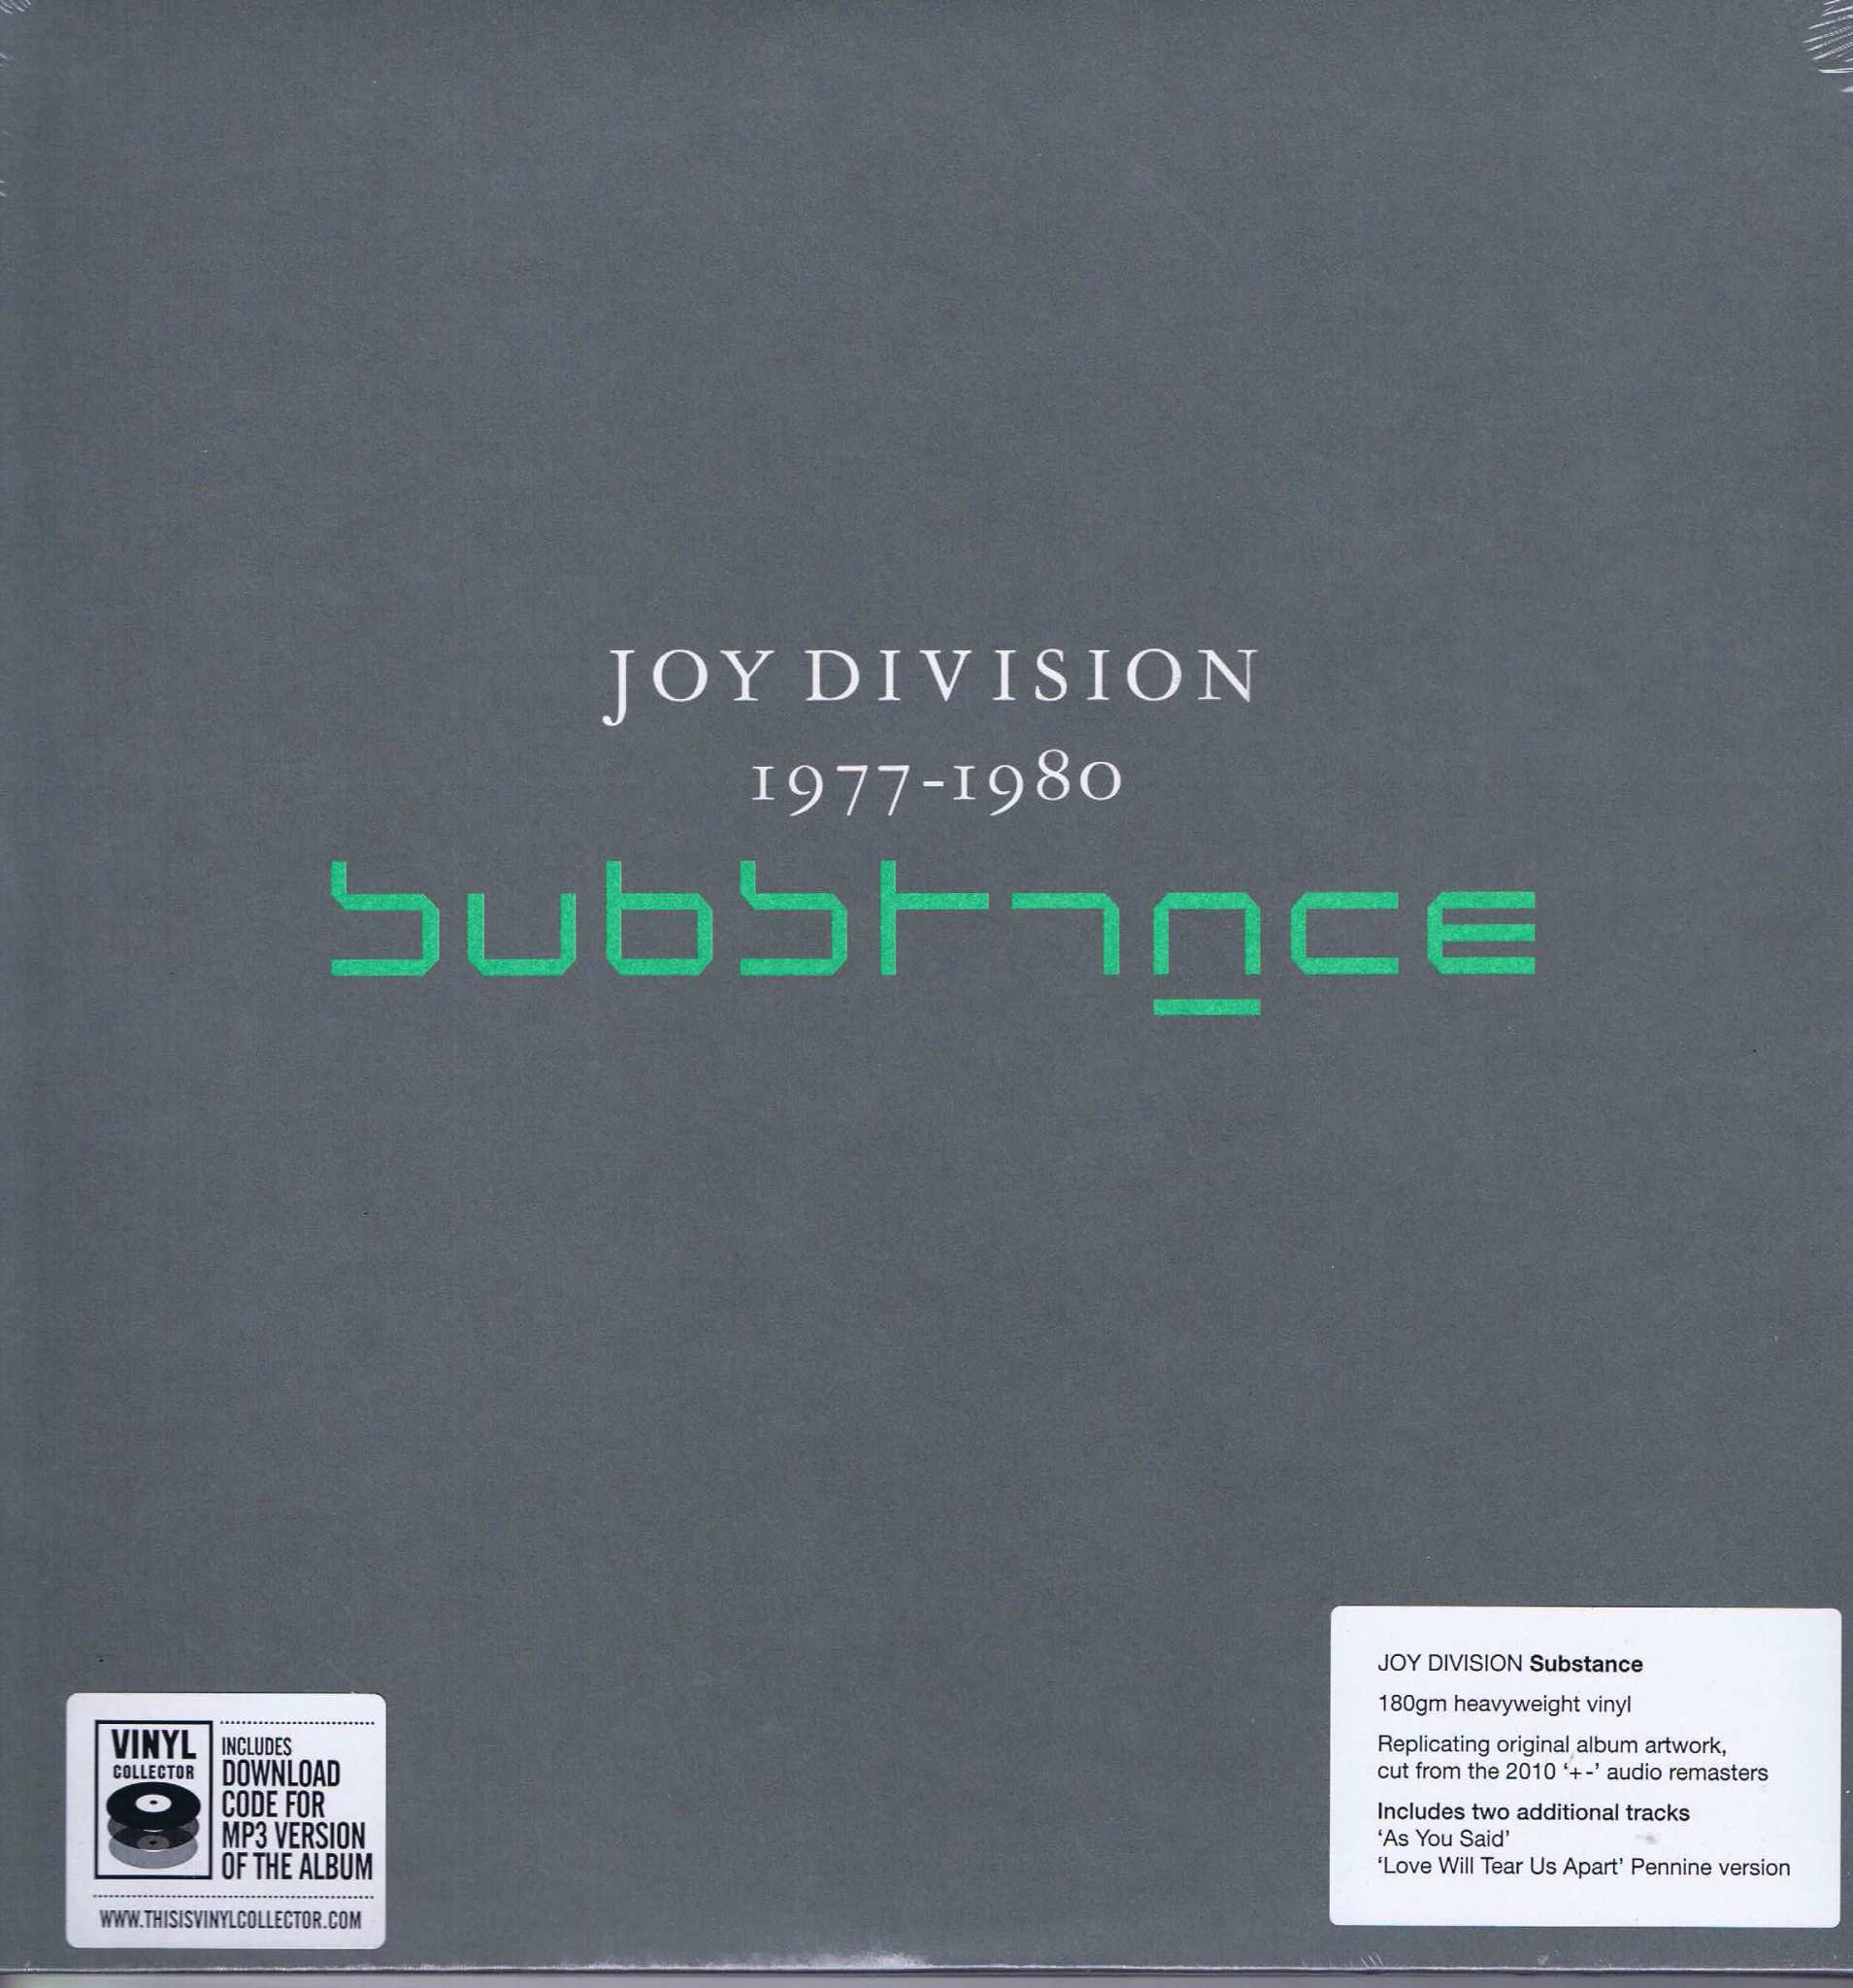 Joy Division - Substance 1977-1980 (Expanded Edition) [Vinyl]